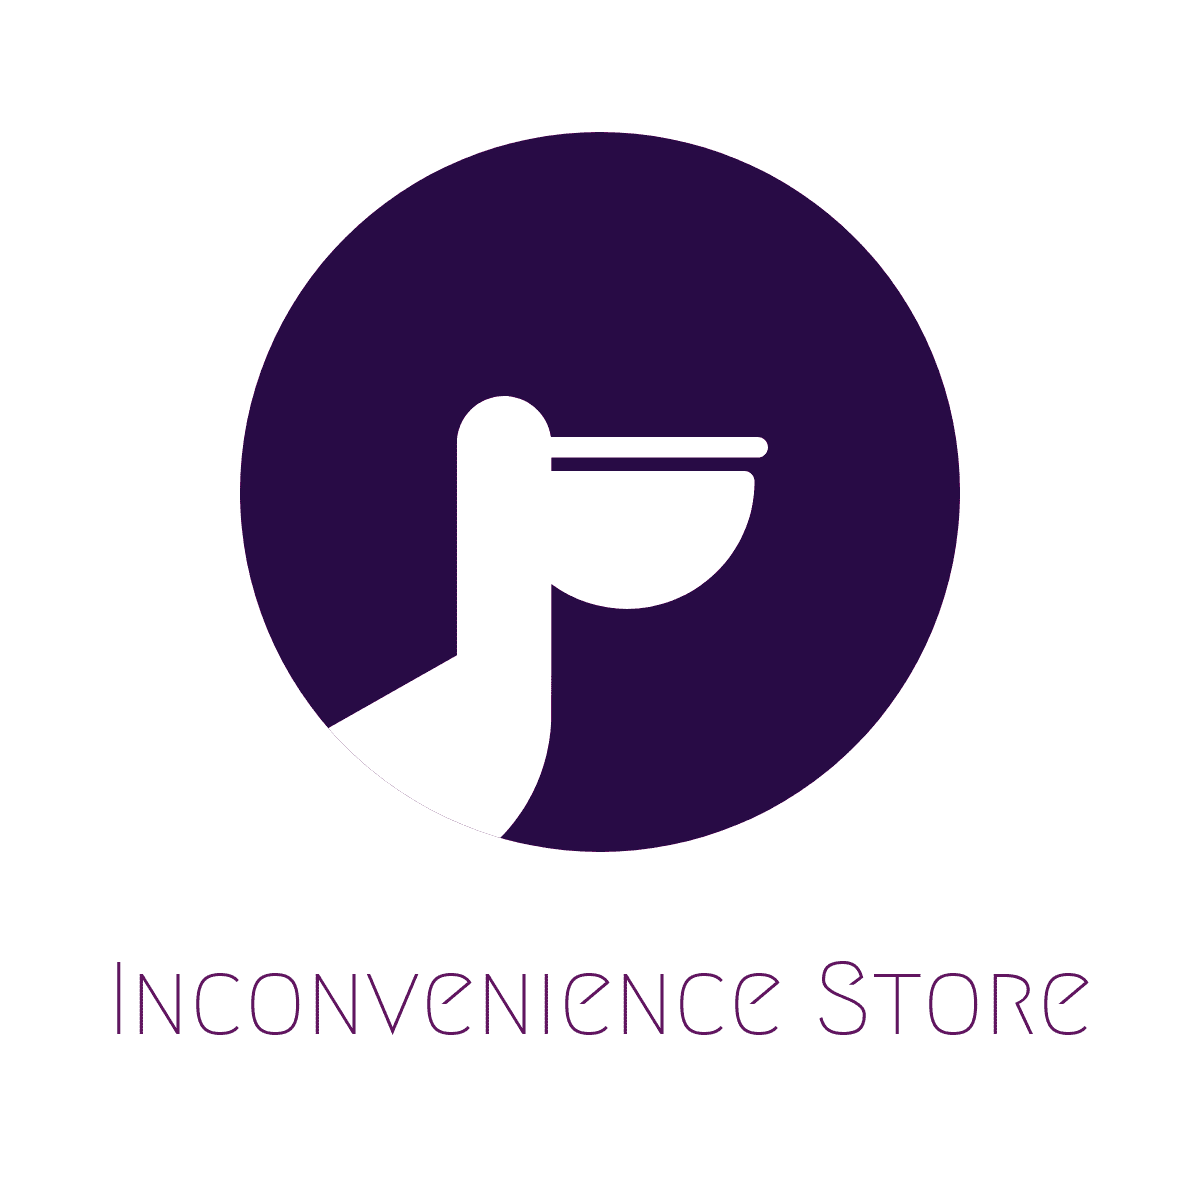 Inconvenience-Store